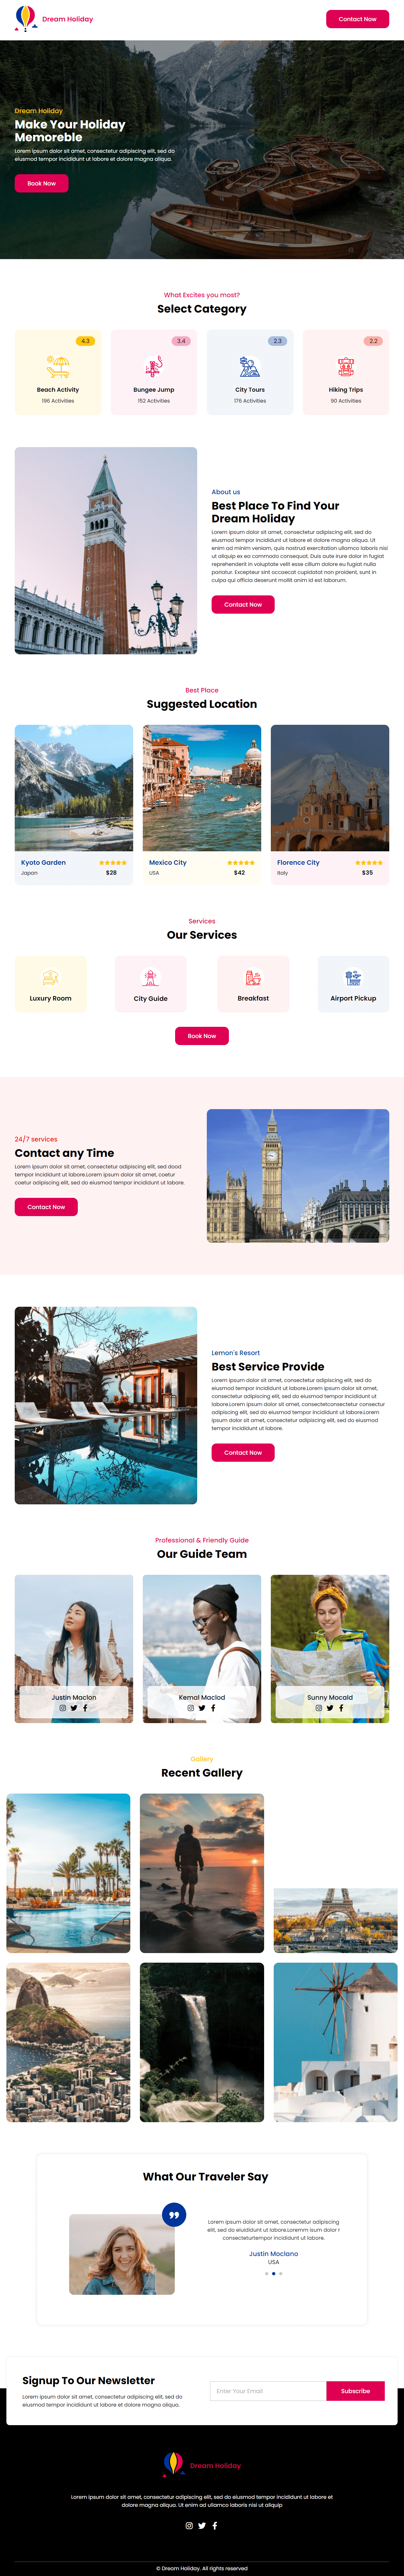 Travel-website-template-2